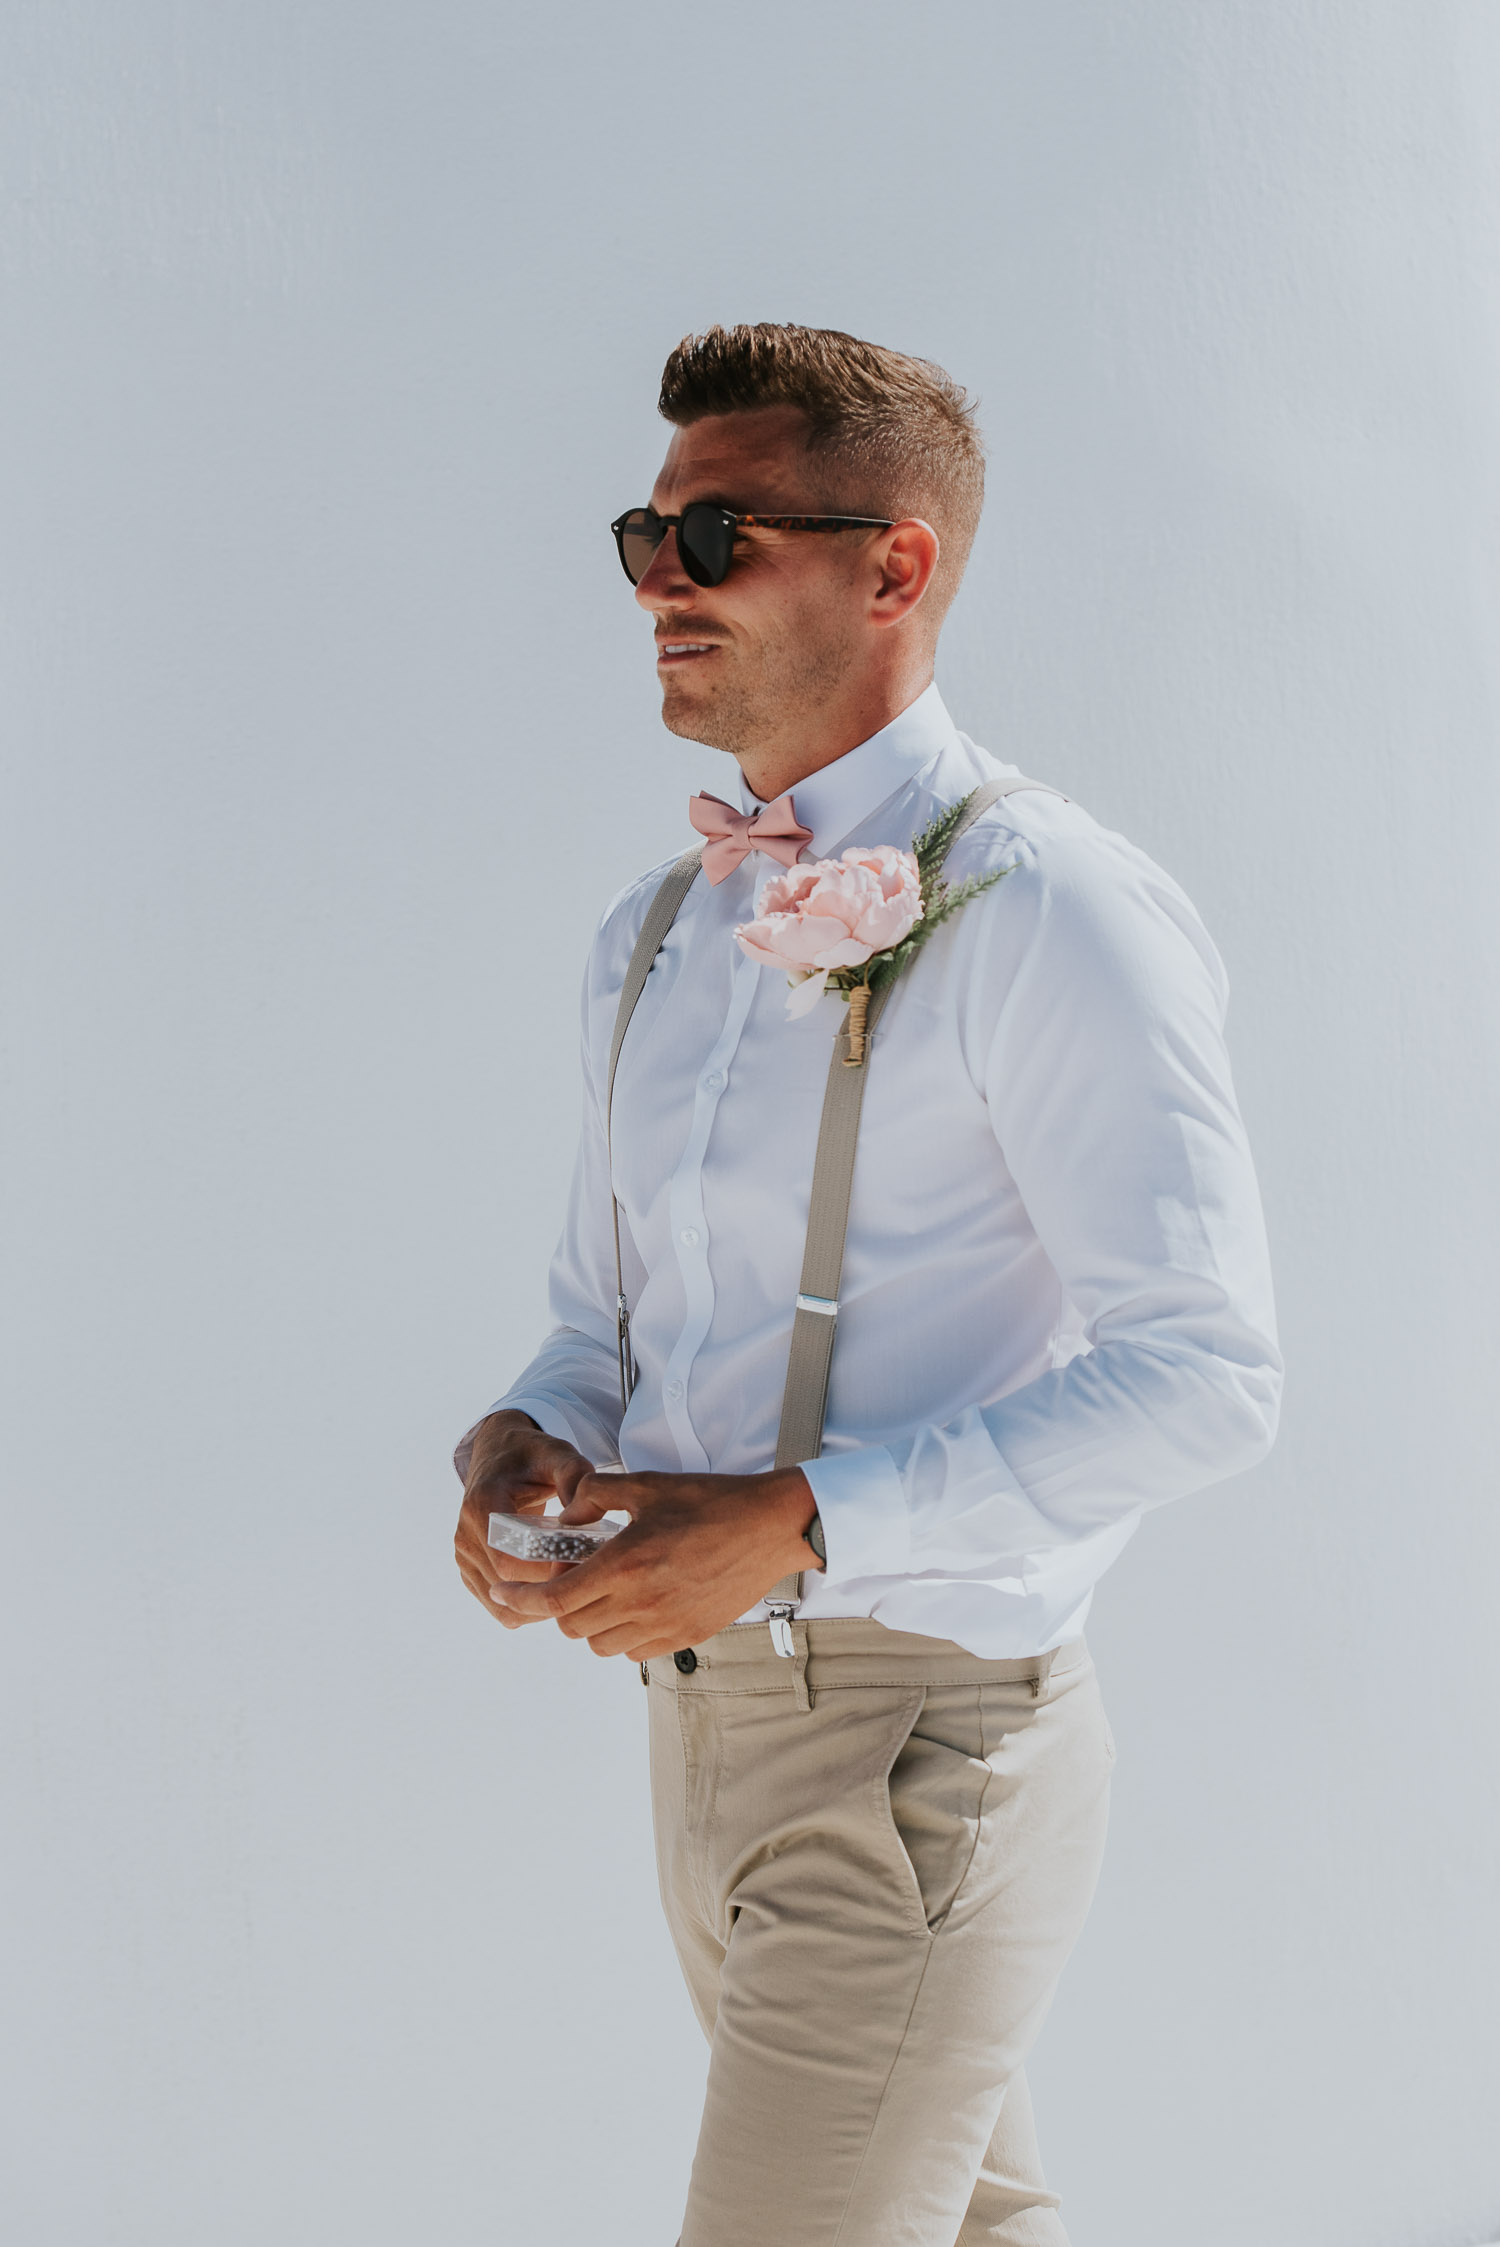 Wedding photographer Santorini: groom walking to the ceremony terrace by Ben and Vesna.